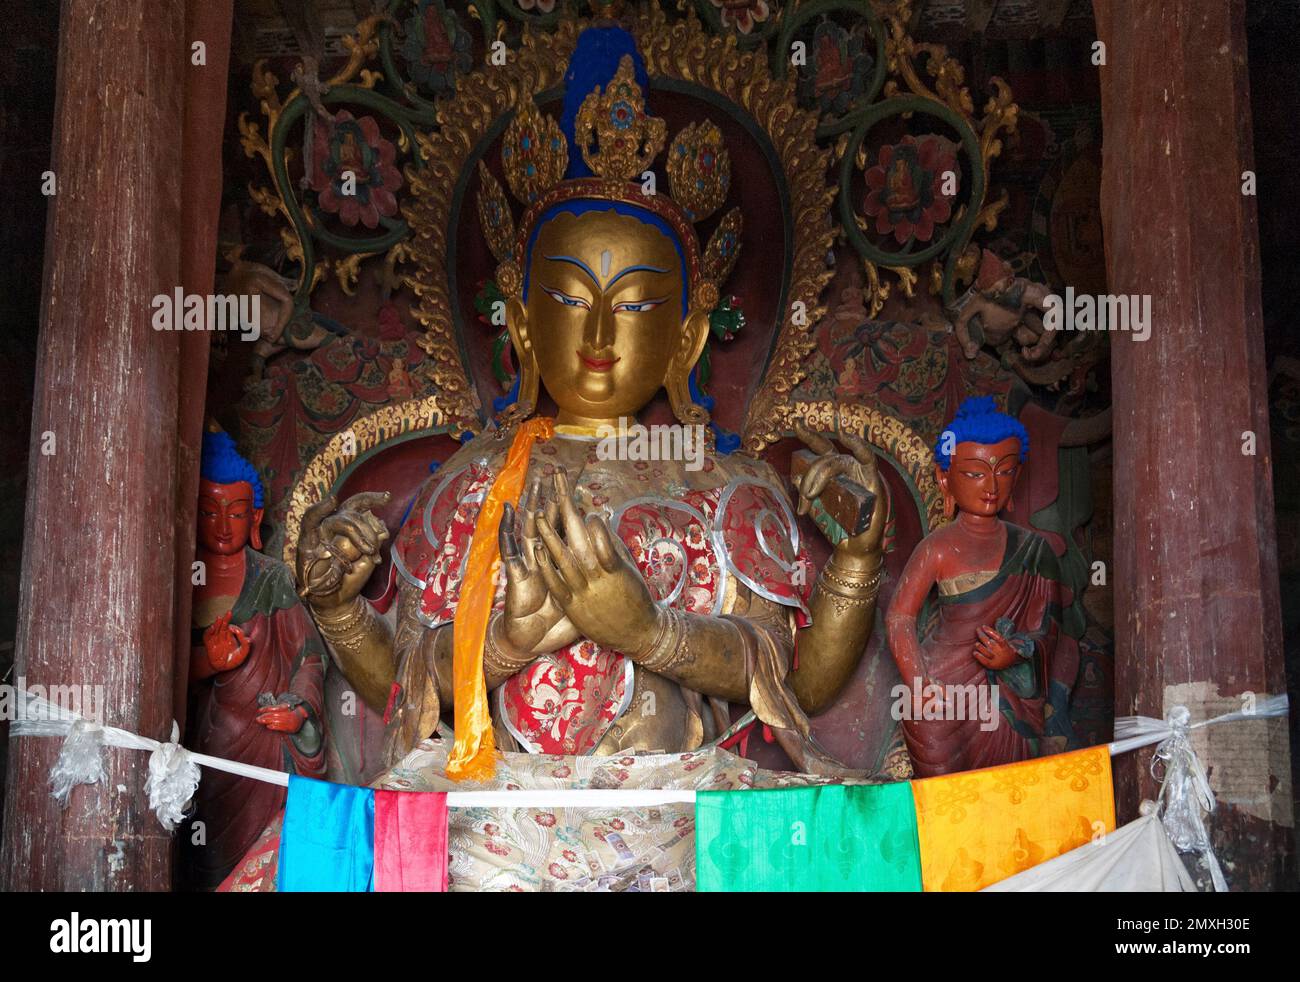 Brightly coloured statues of Tibetan deities inside the Buddhist Kumbum chorten in Gyantse in the Pelkor Chode Monastery - Tibet Stock Photo